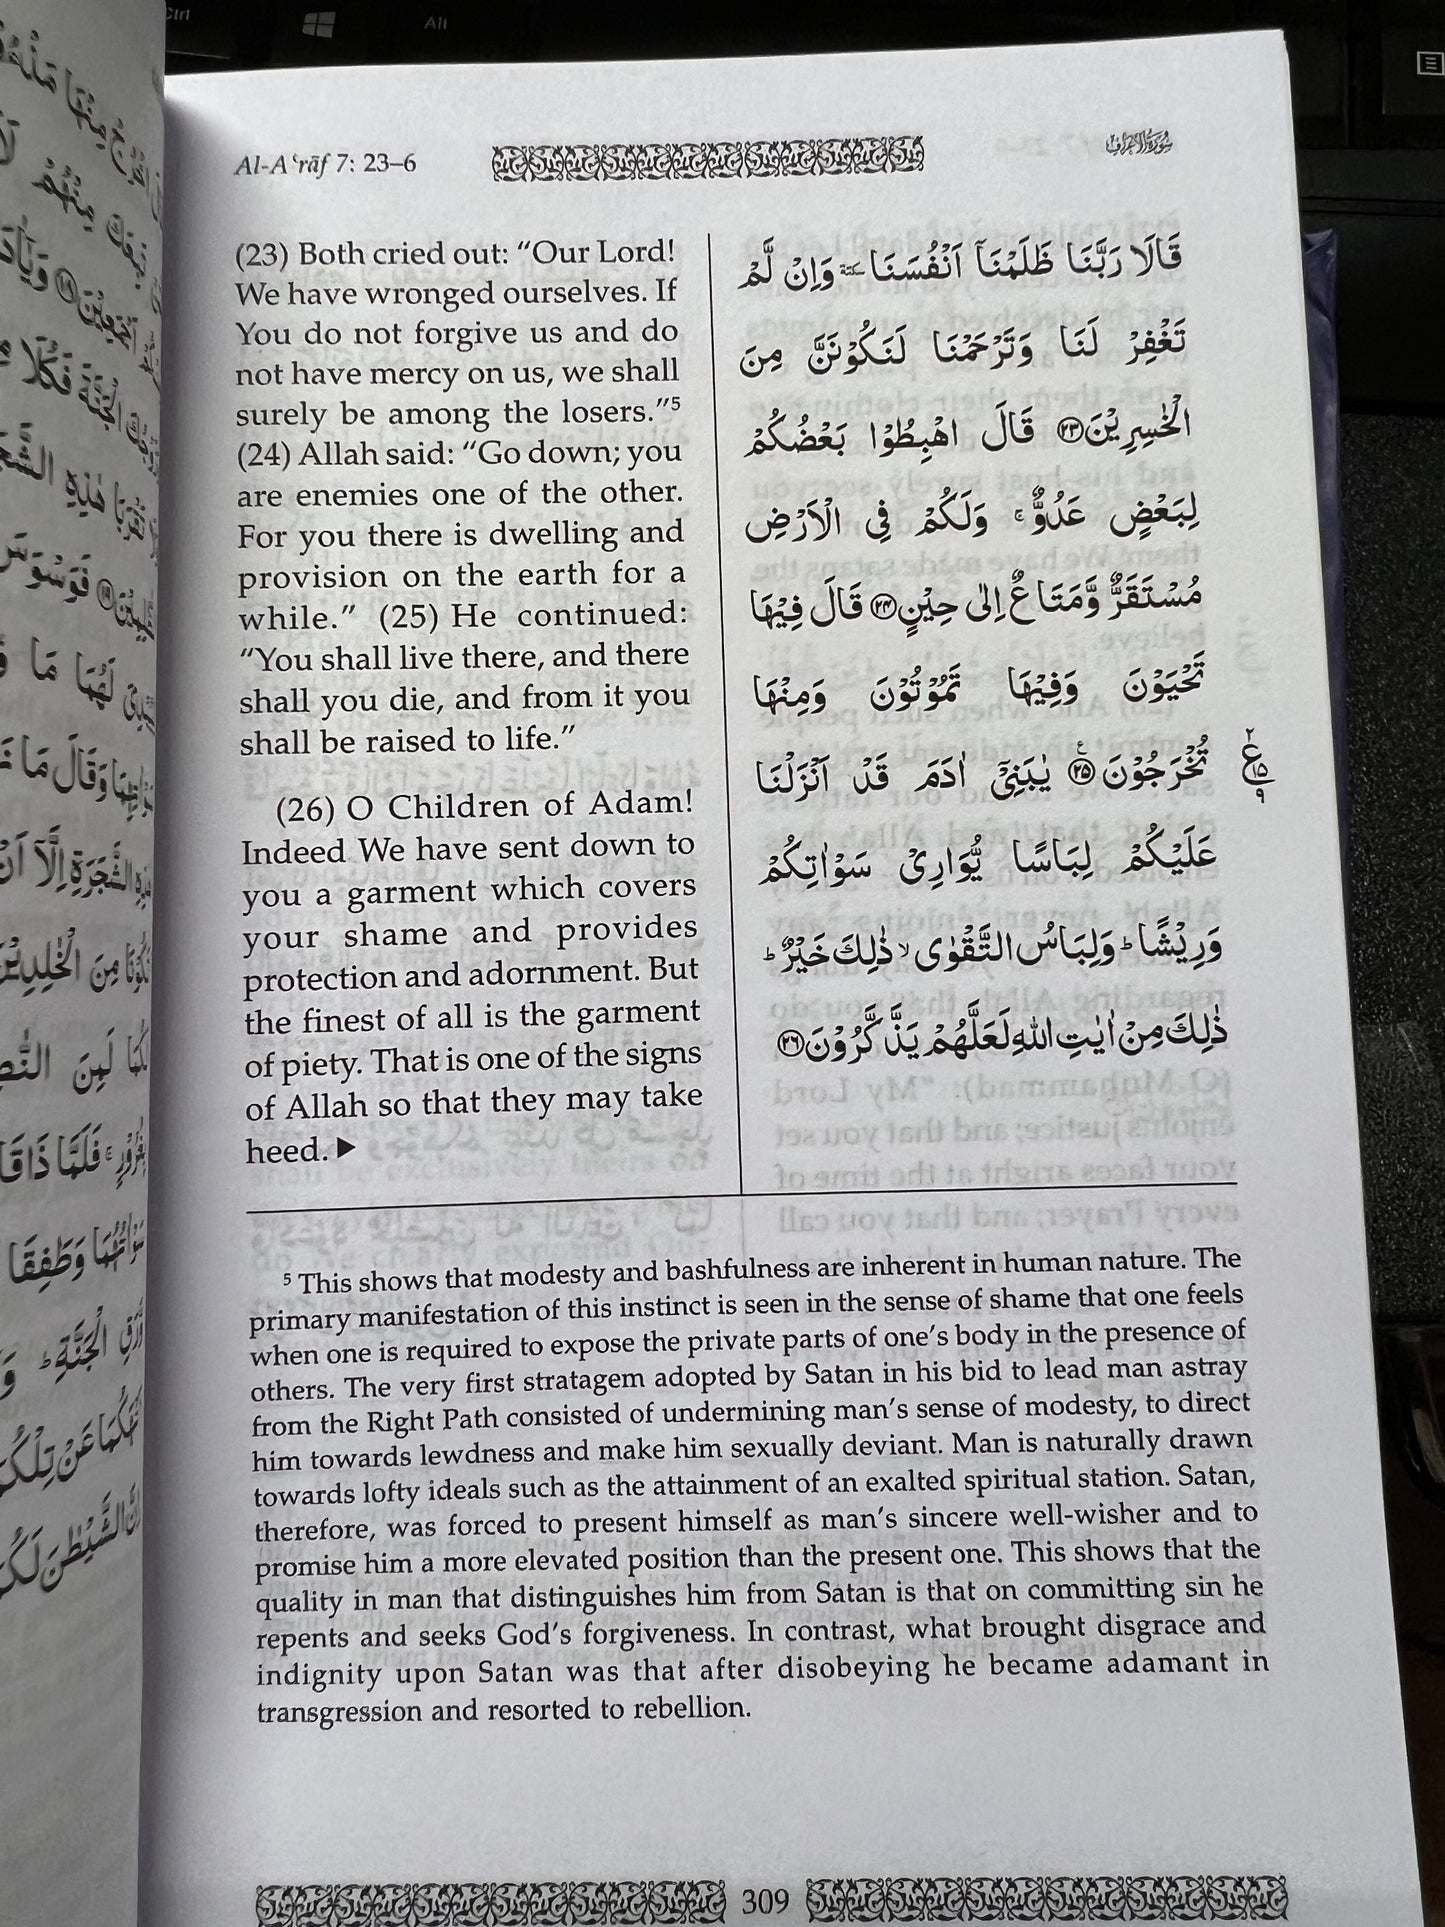 Towards Understanding Qur'an